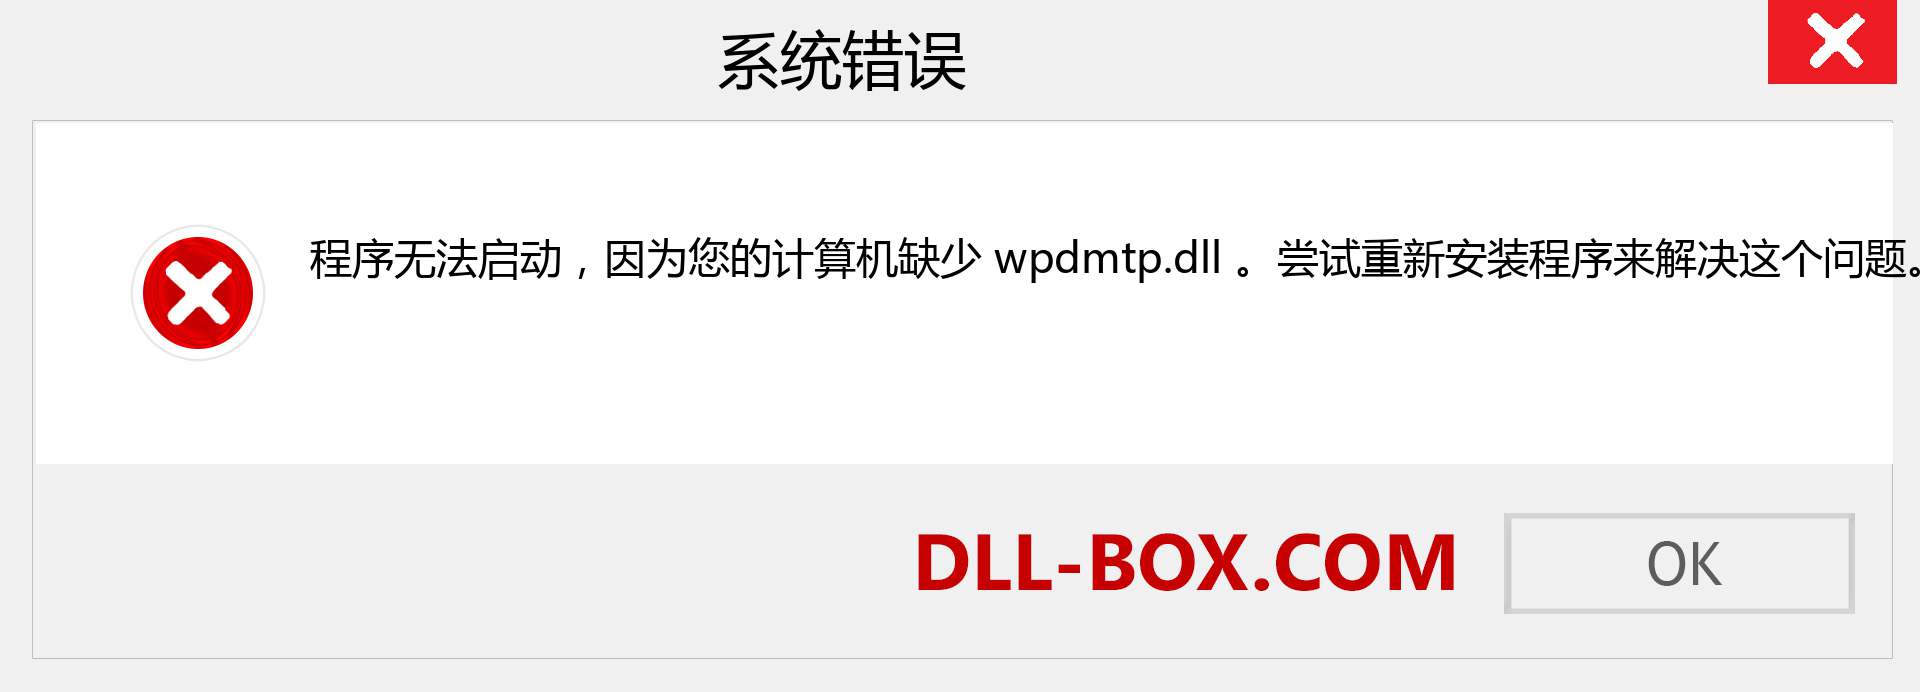 wpdmtp.dll 文件丢失？。 适用于 Windows 7、8、10 的下载 - 修复 Windows、照片、图像上的 wpdmtp dll 丢失错误